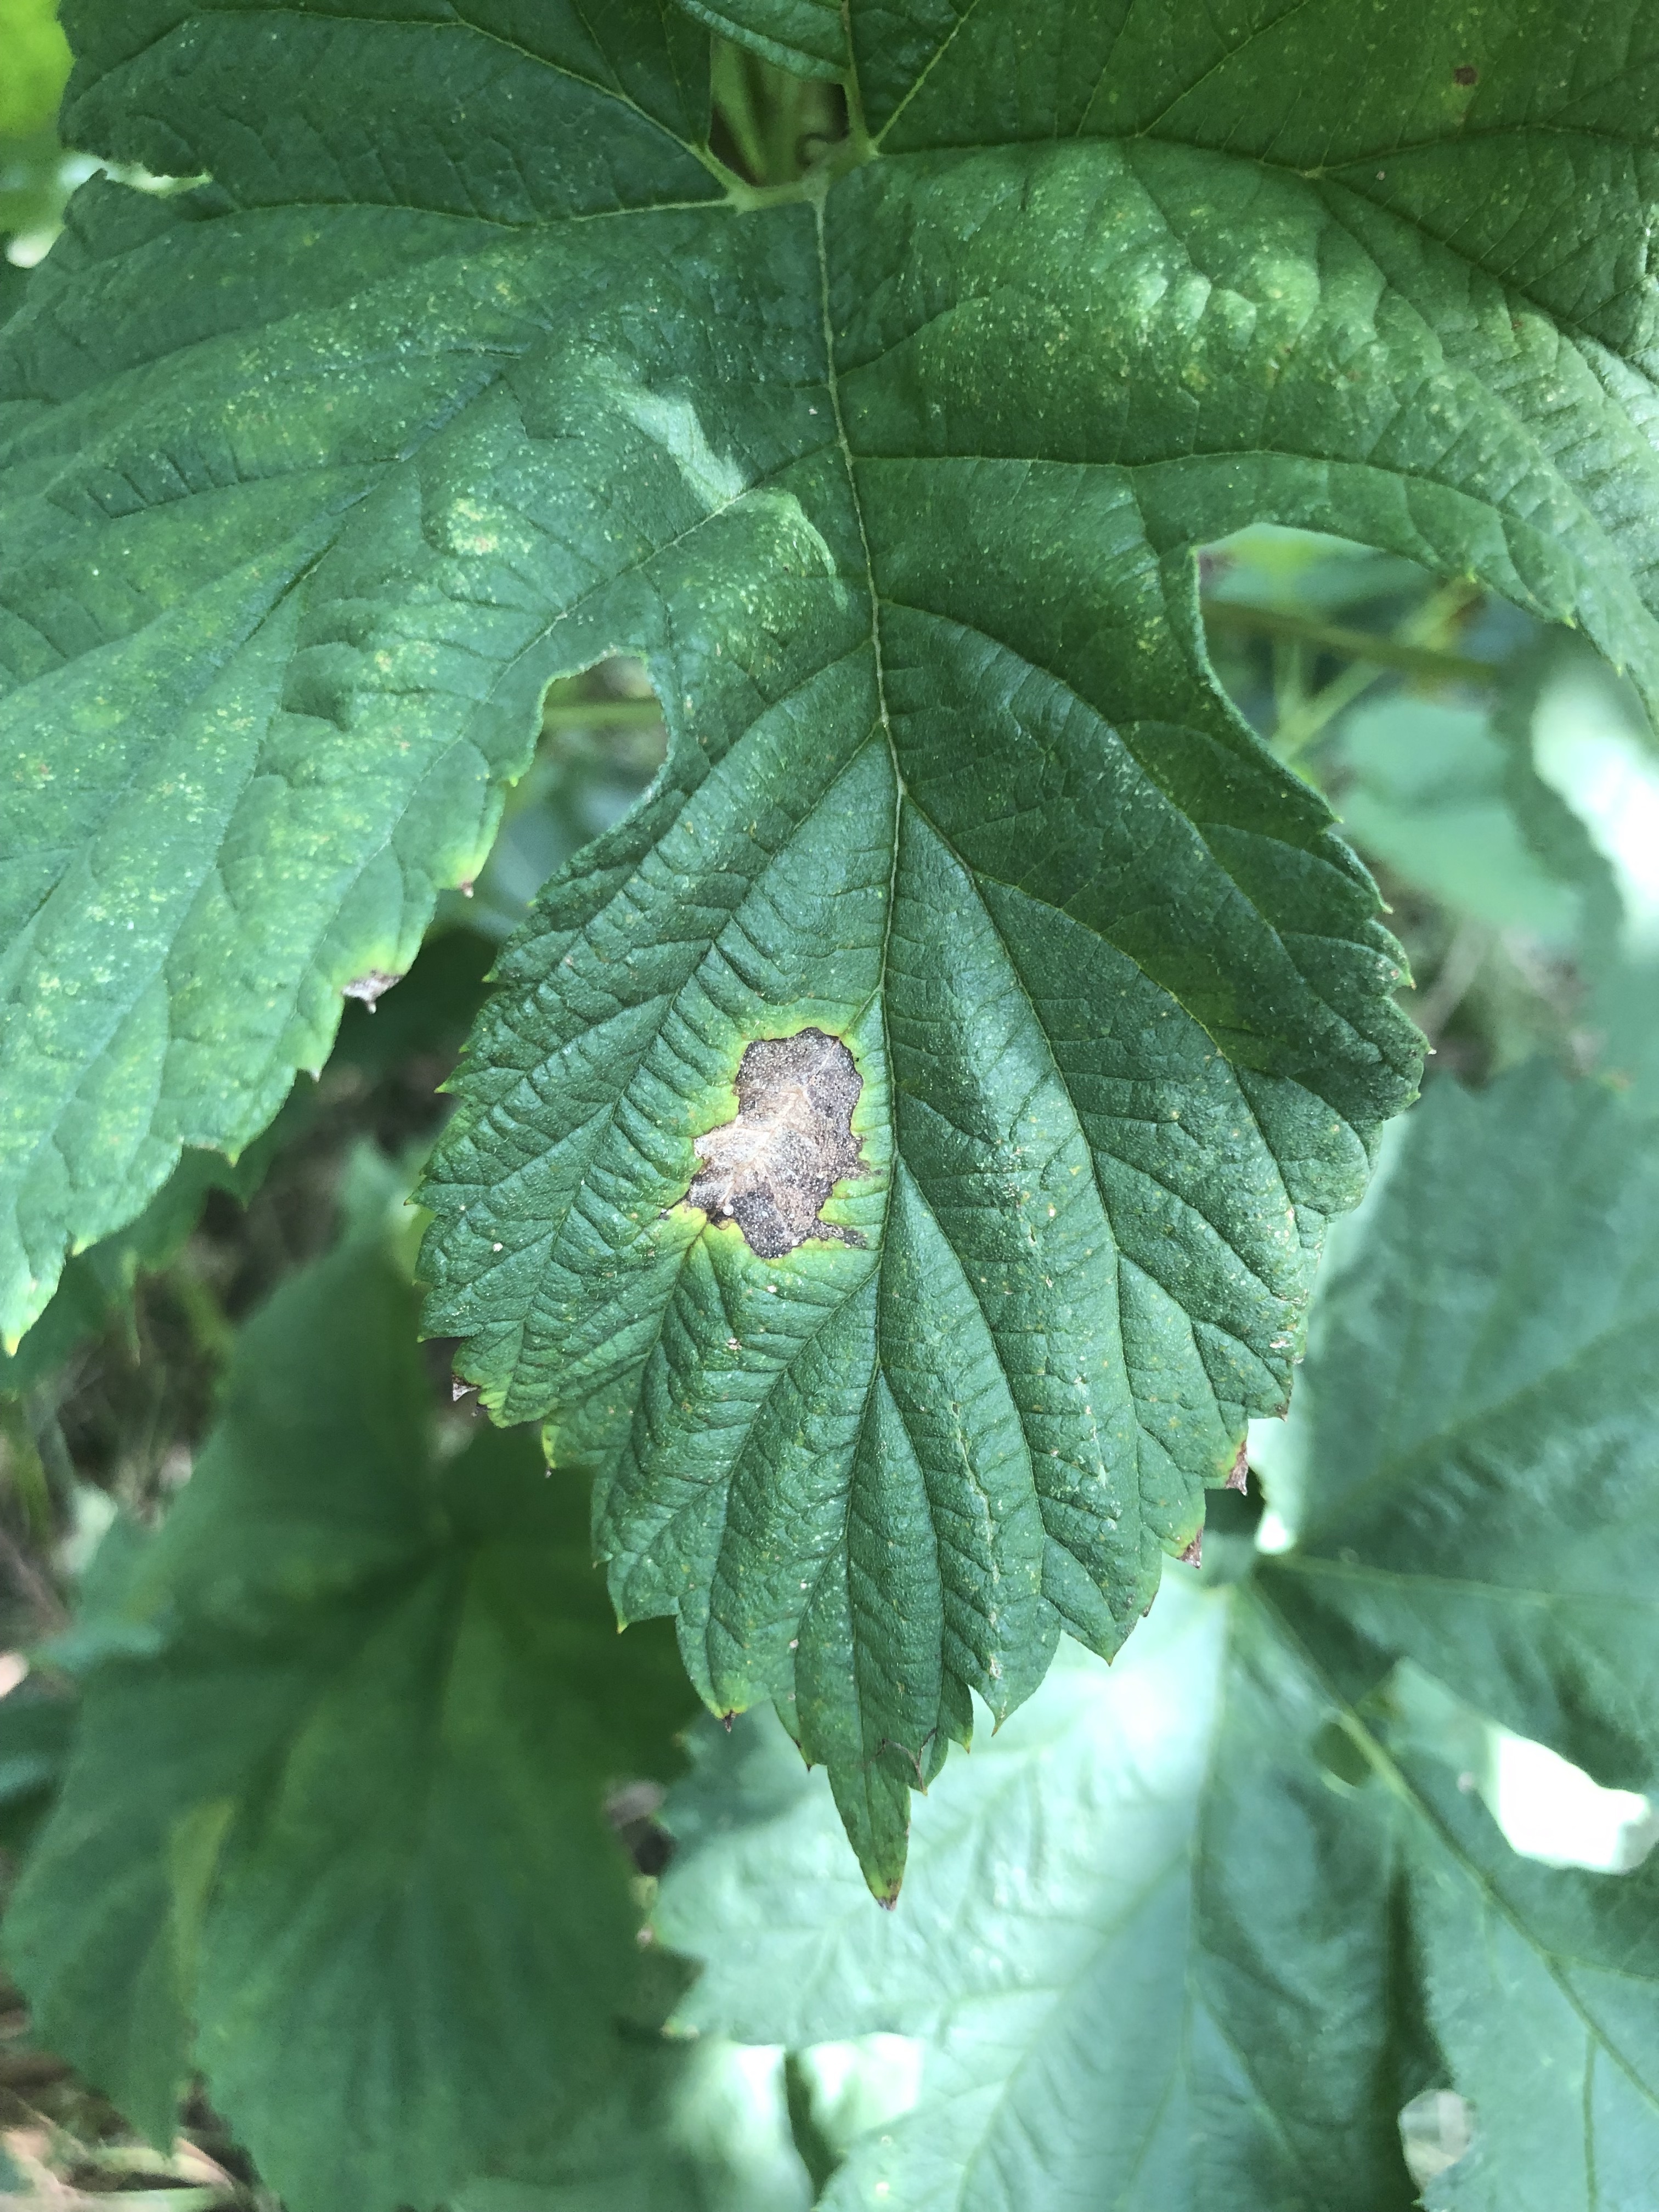 halo blight on leaf